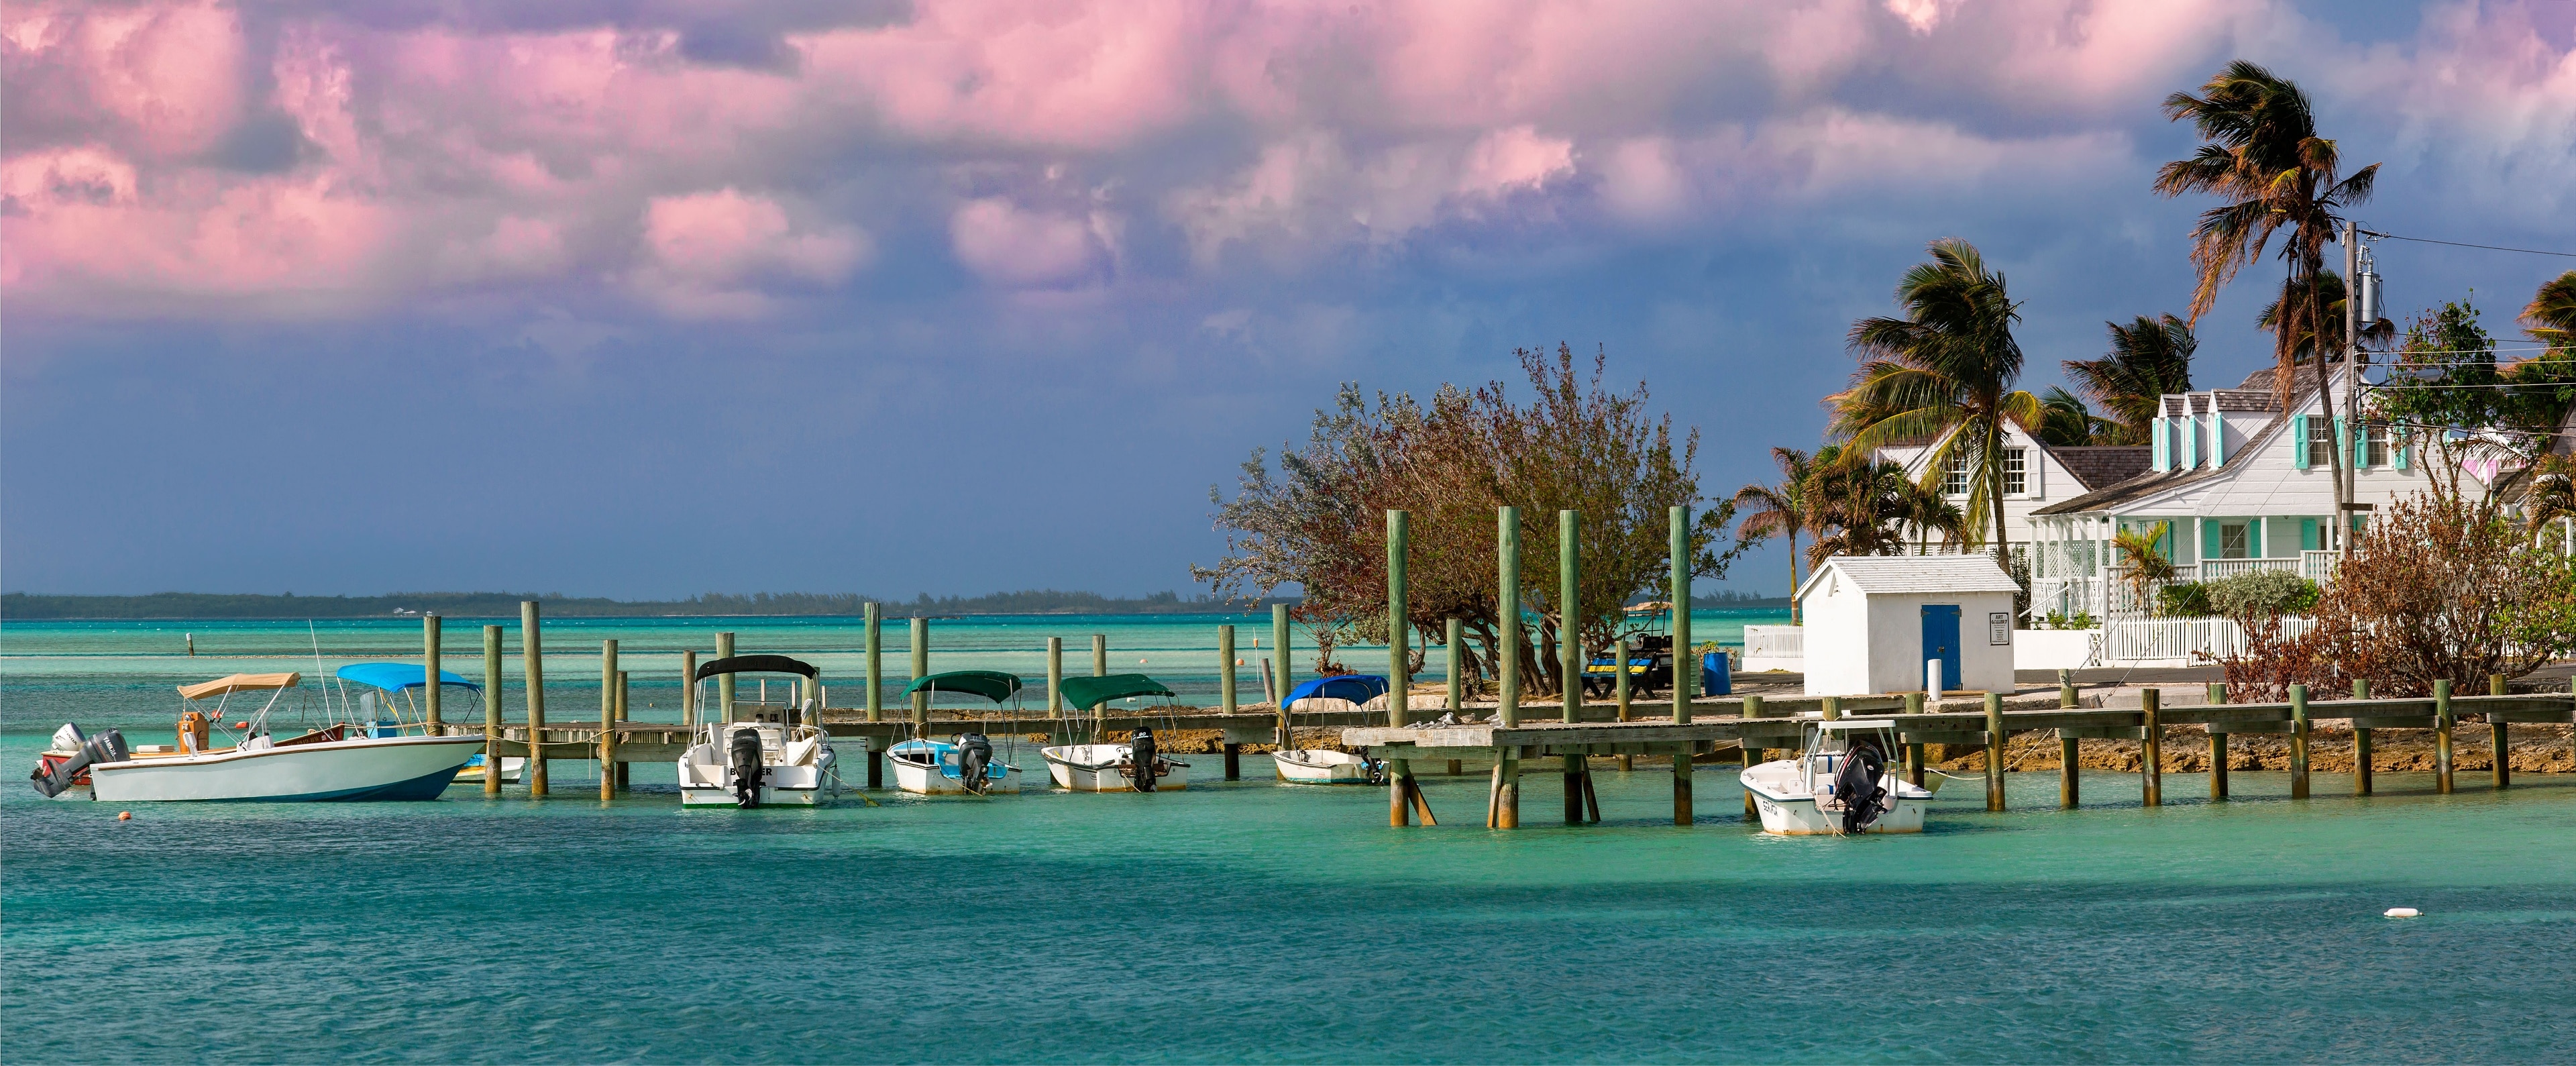 Dunmore Town, Harbor Island, Bahamas